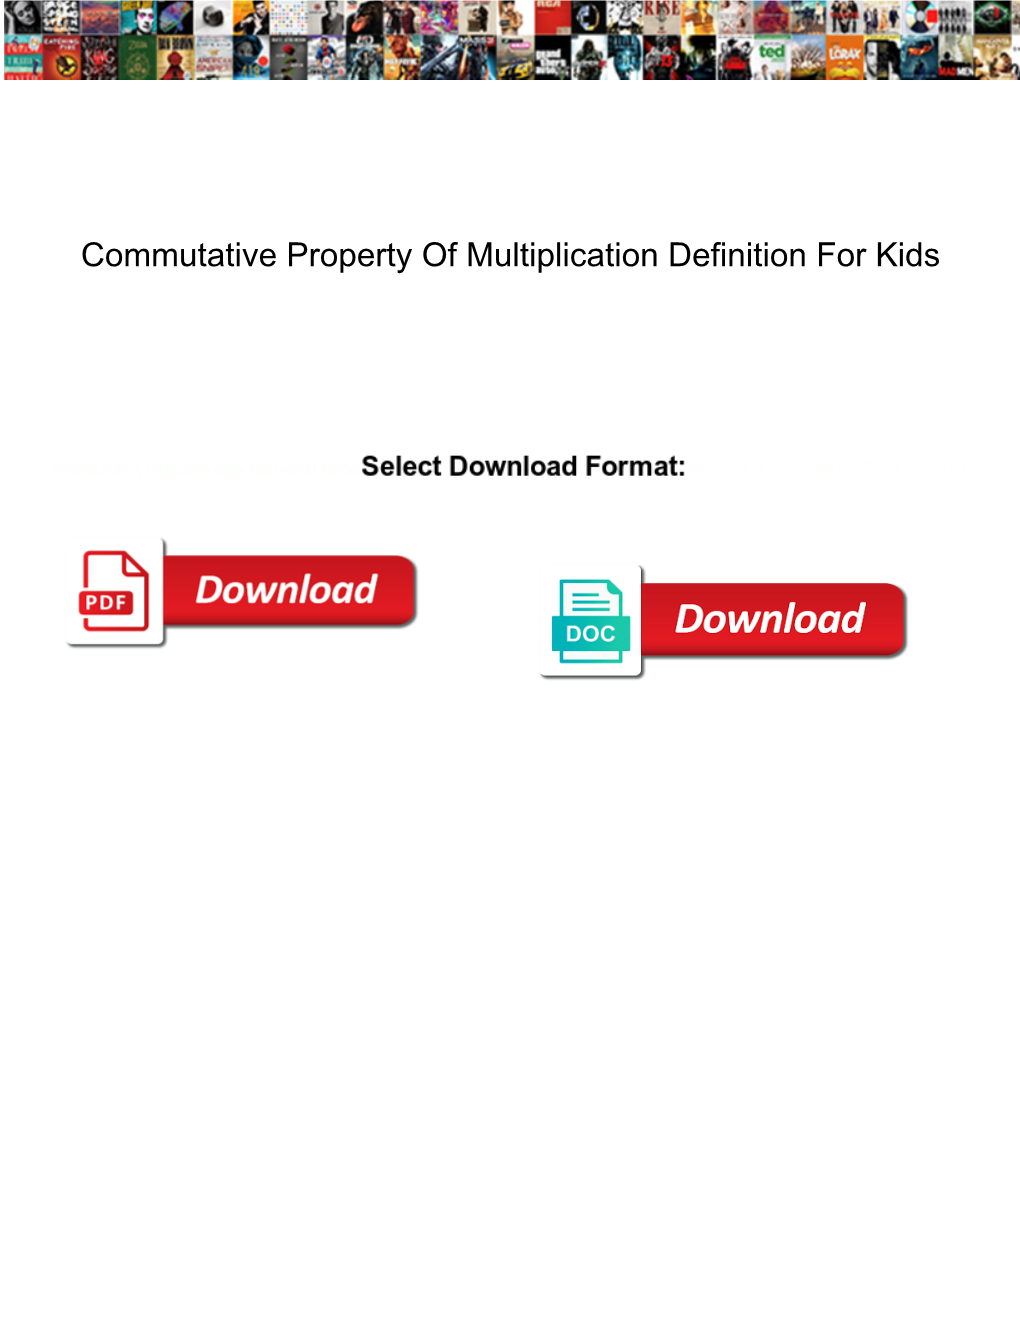 Commutative Property of Multiplication Definition for Kids